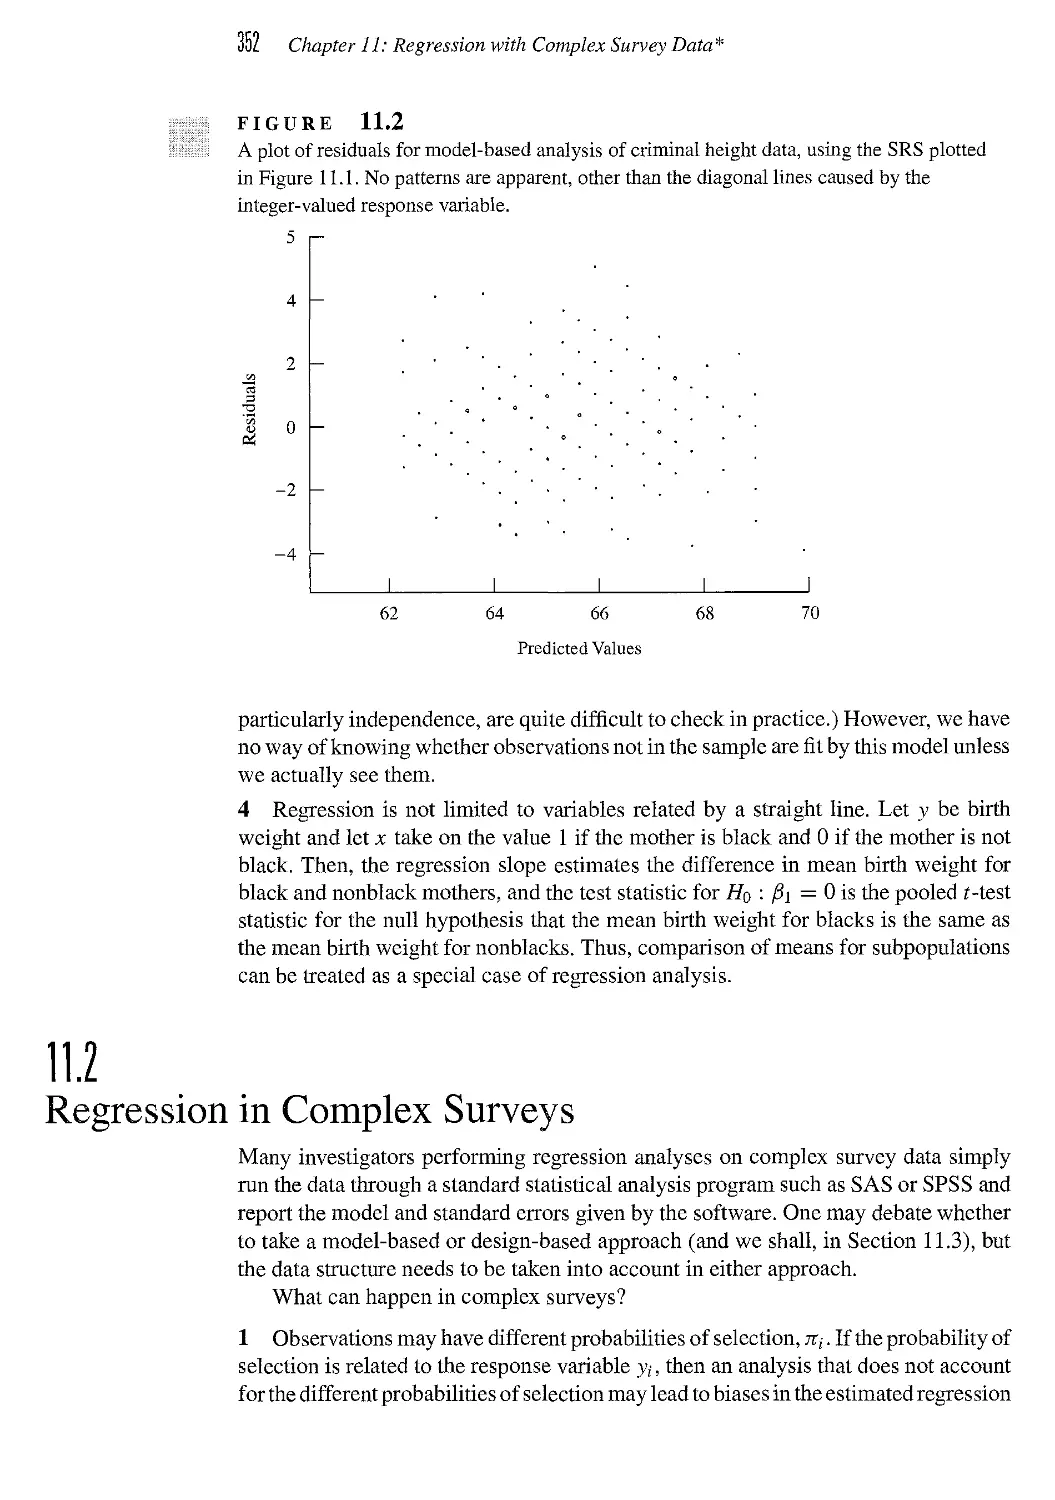 11.2 Regression in Complex Surveys